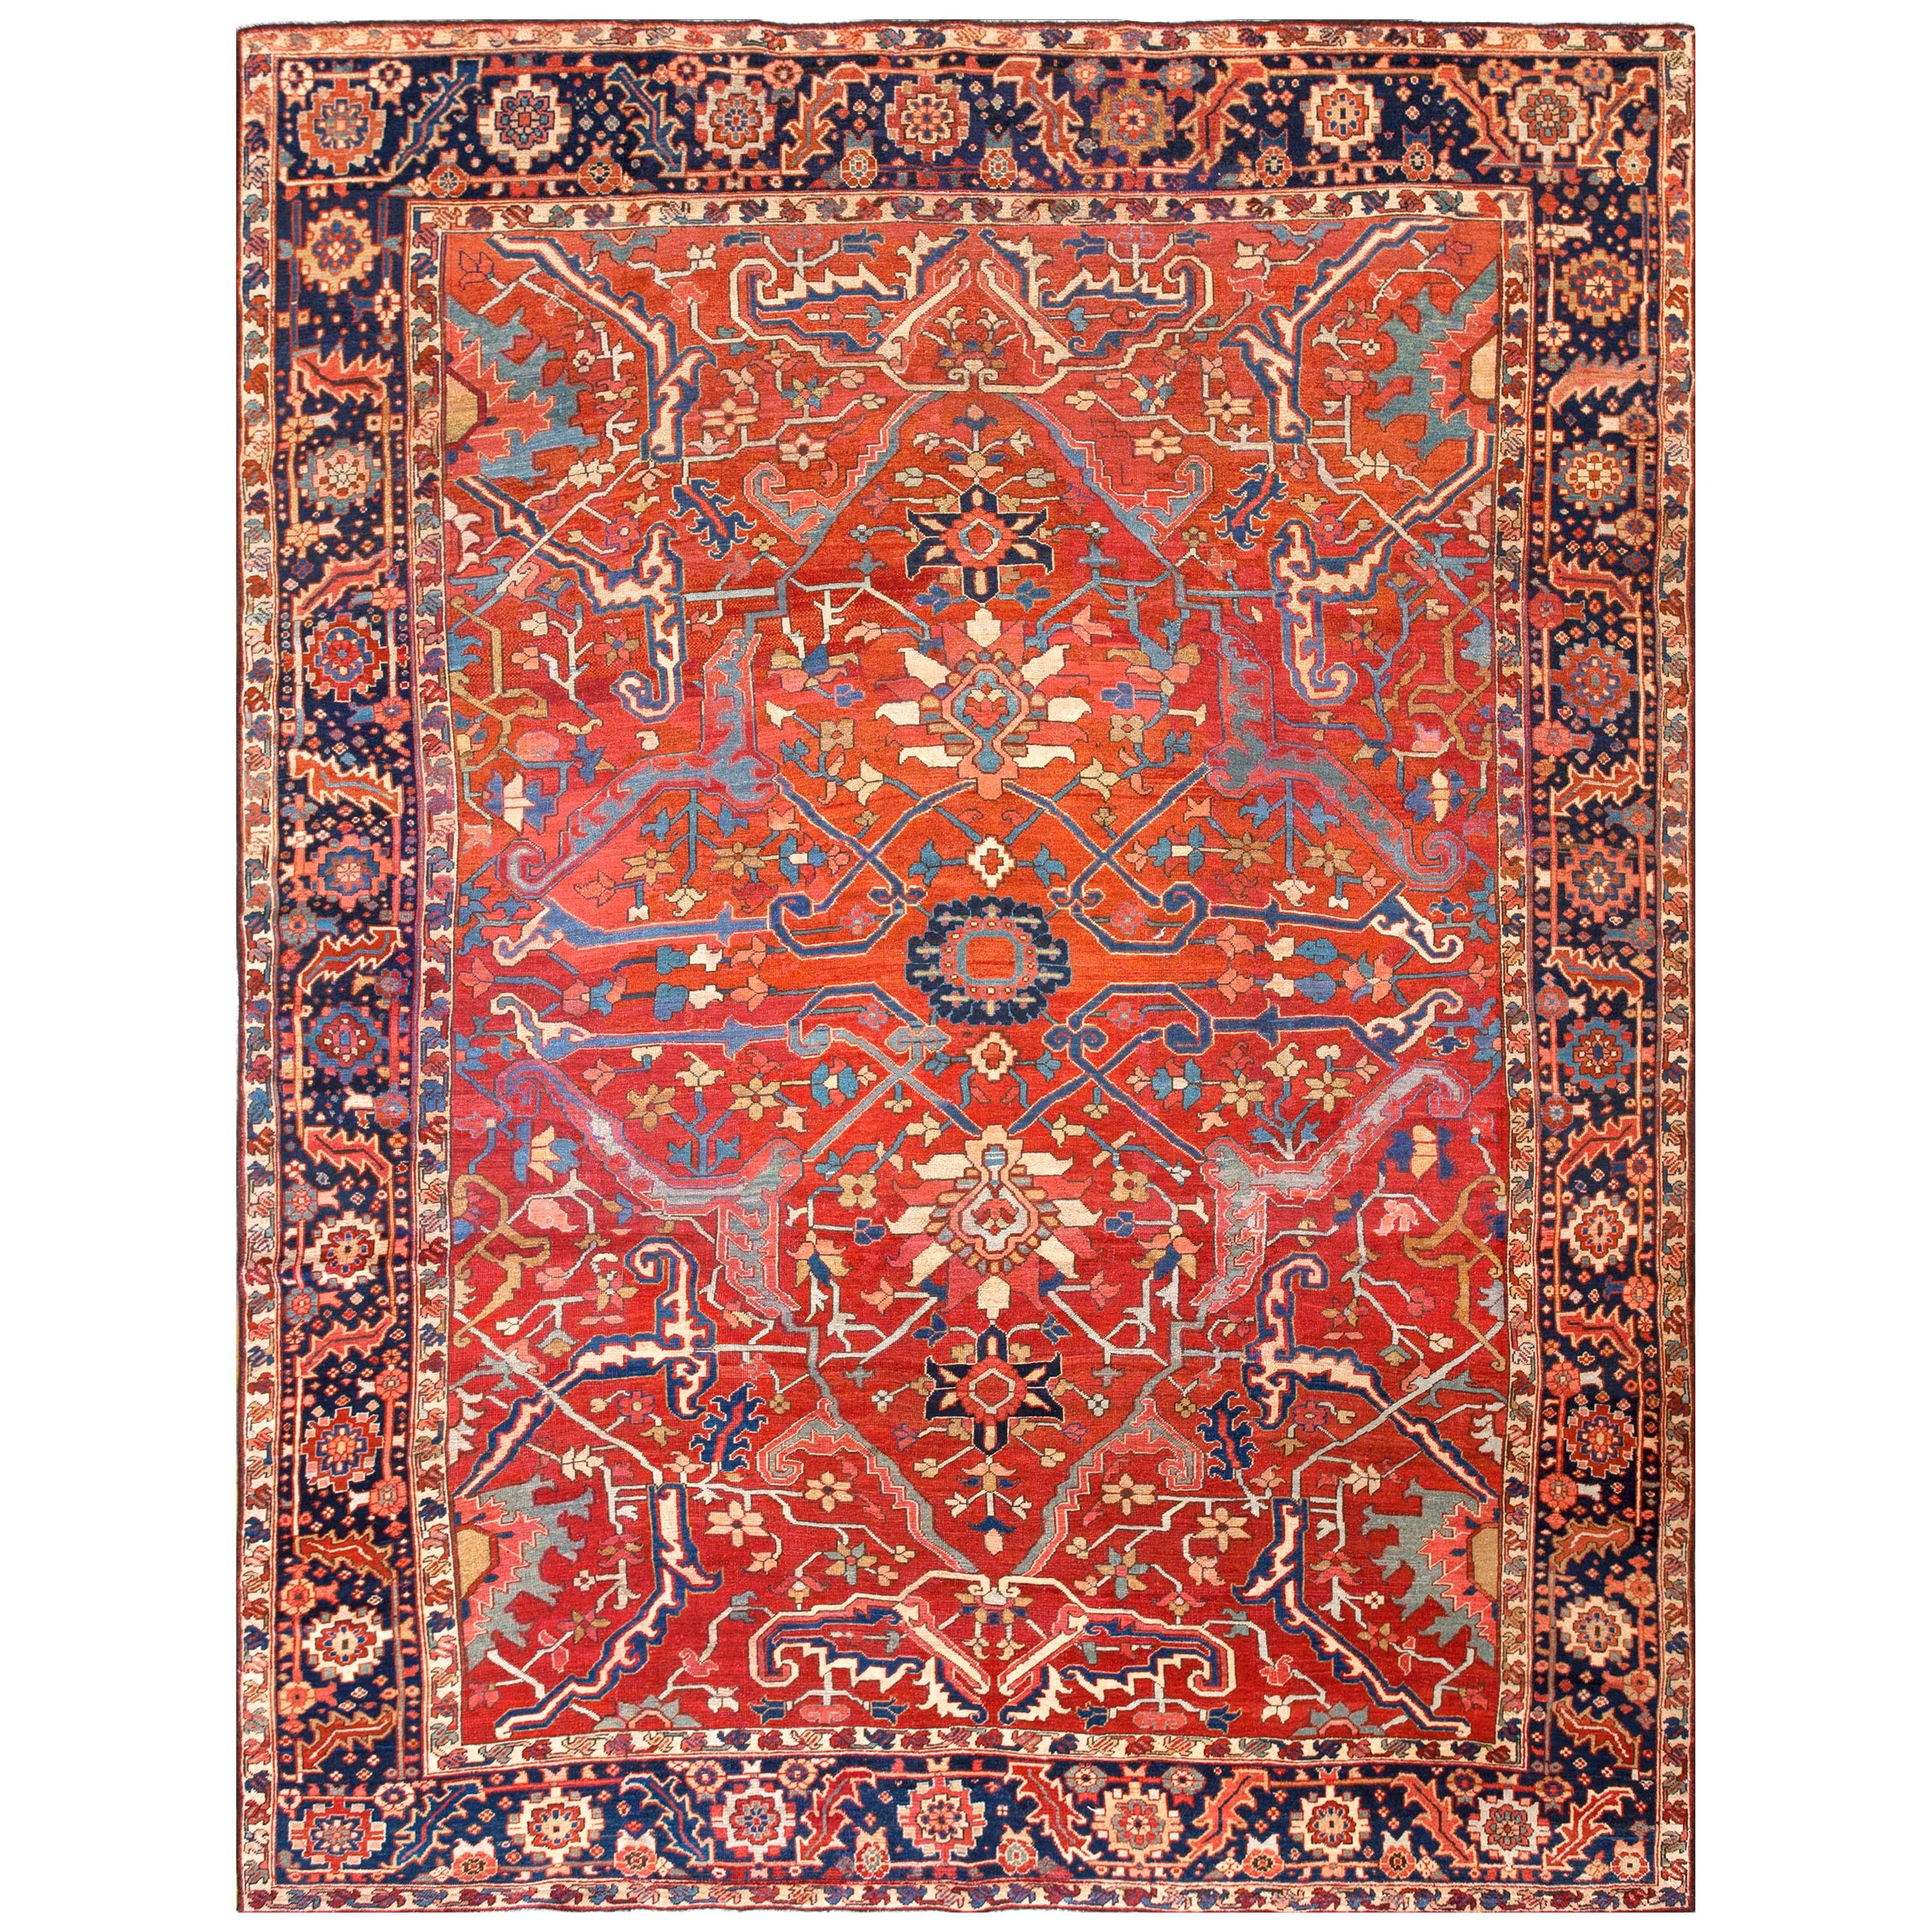 Late 19th Century N.W. Persian Serapi Carpet ( 9'6" x 13' - 290 x 396 ) 